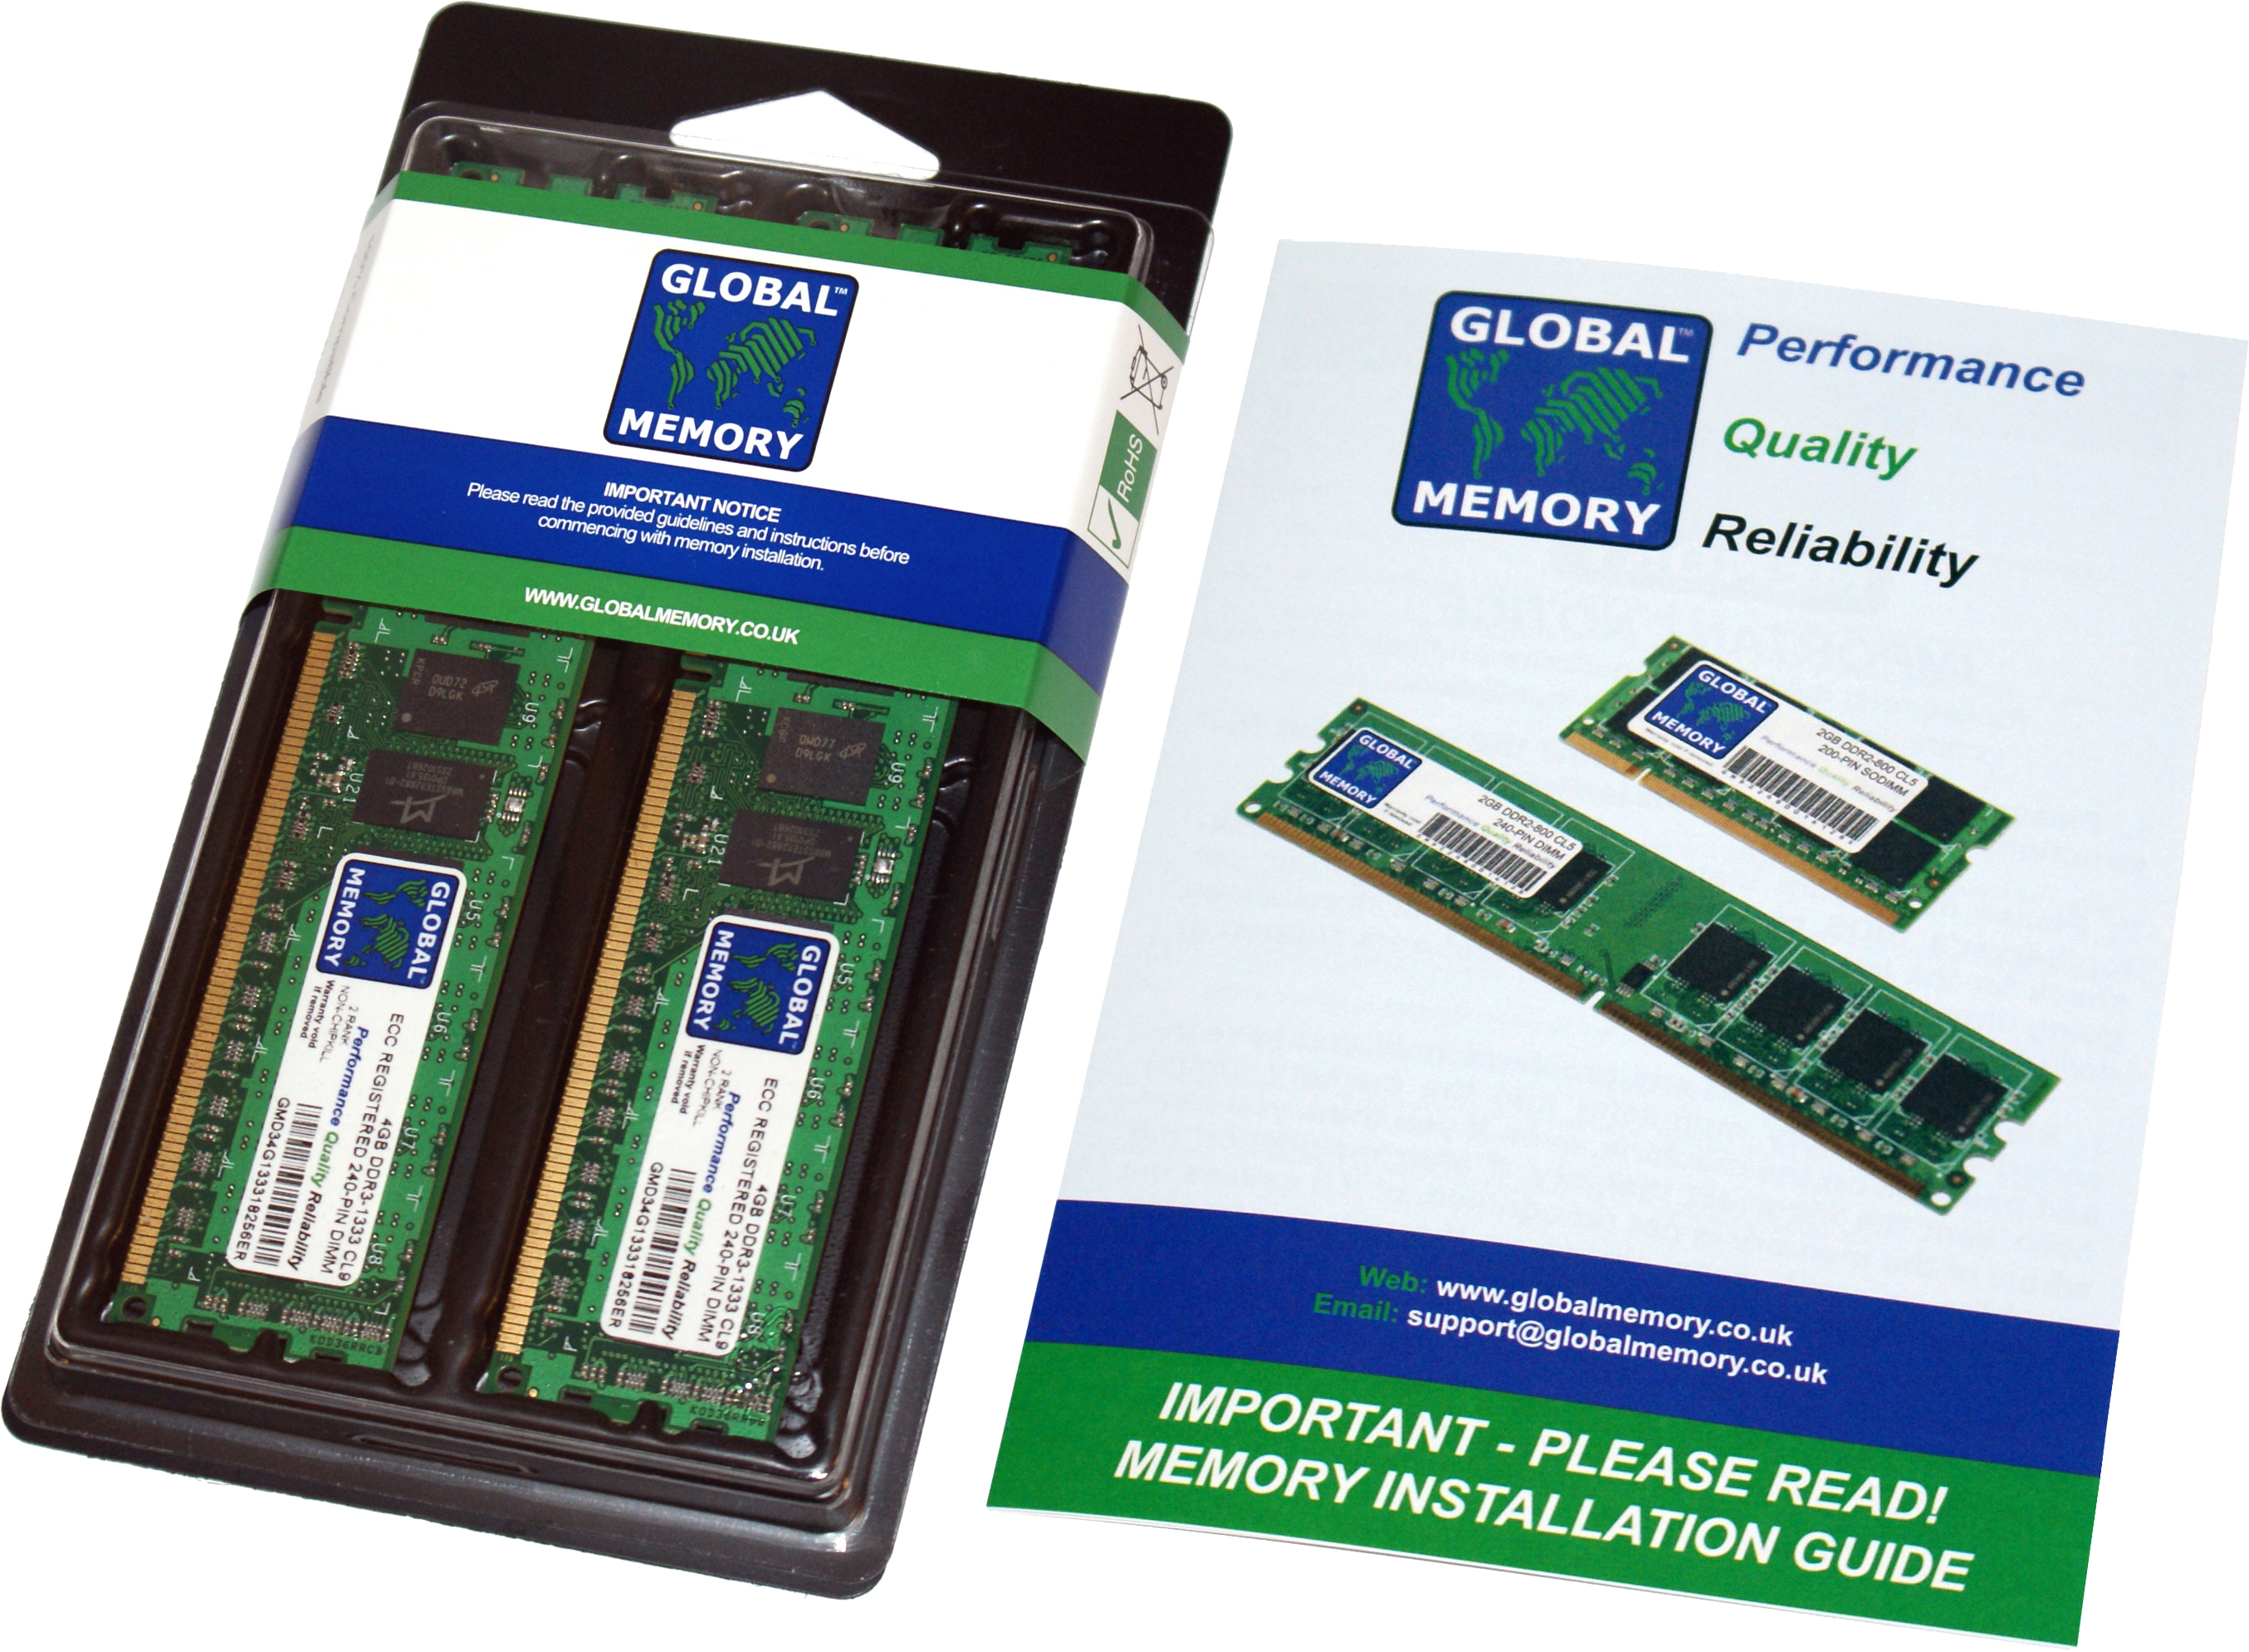 32GB (2 x 16GB) DDR4 2933MHz PC4-23400 288-PIN ECC REGISTERED DIMM (RDIMM) MEMORY RAM KIT FOR SUN SERVERS/WORKSTATIONS (4 RANK KIT CHIPKILL)